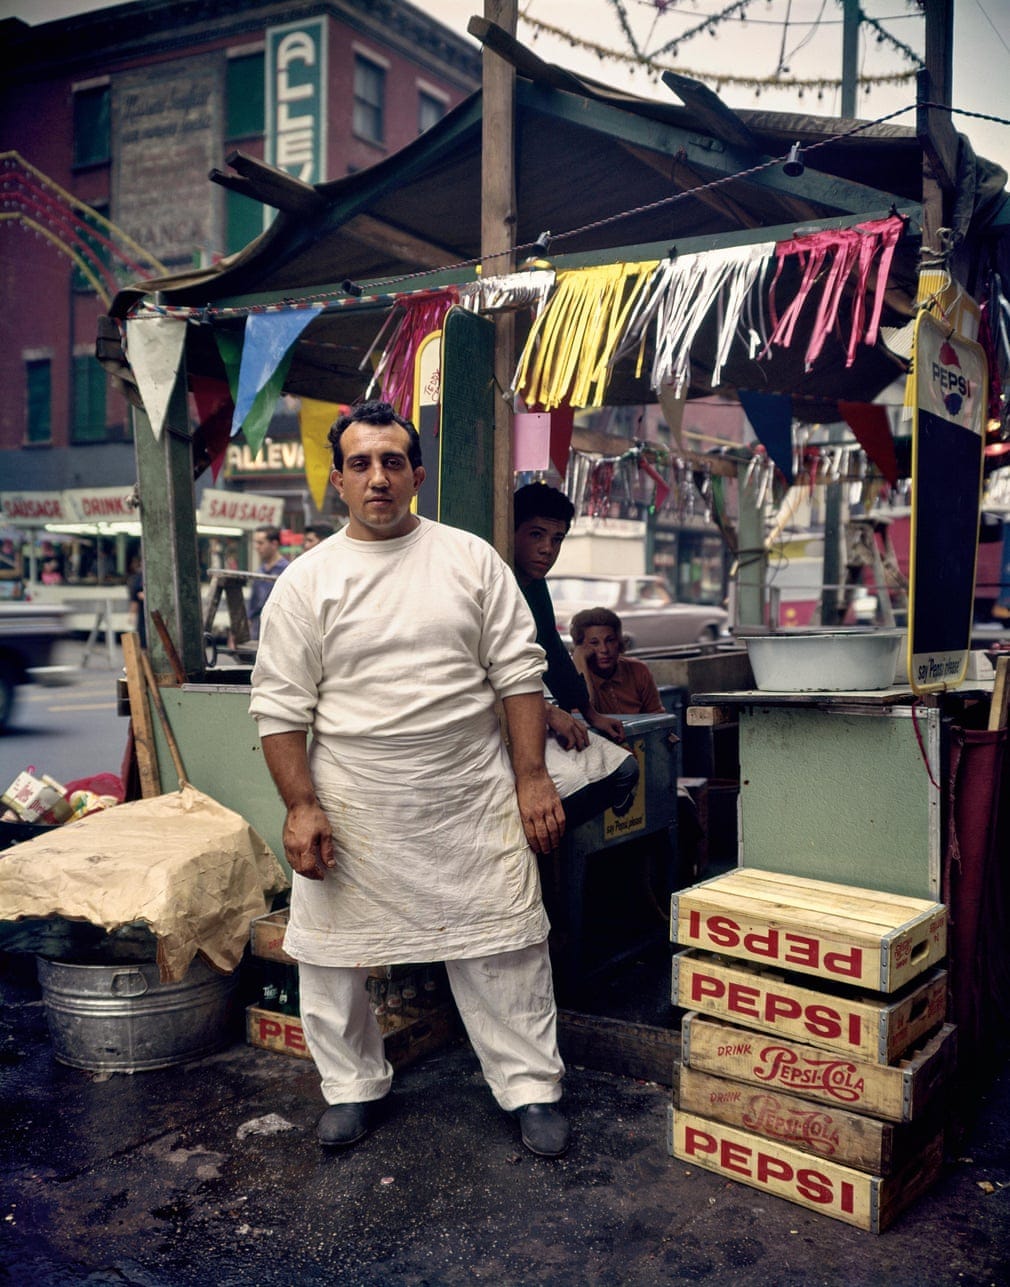 Hotdog stand, 1963, New York - Evelyn Hofer